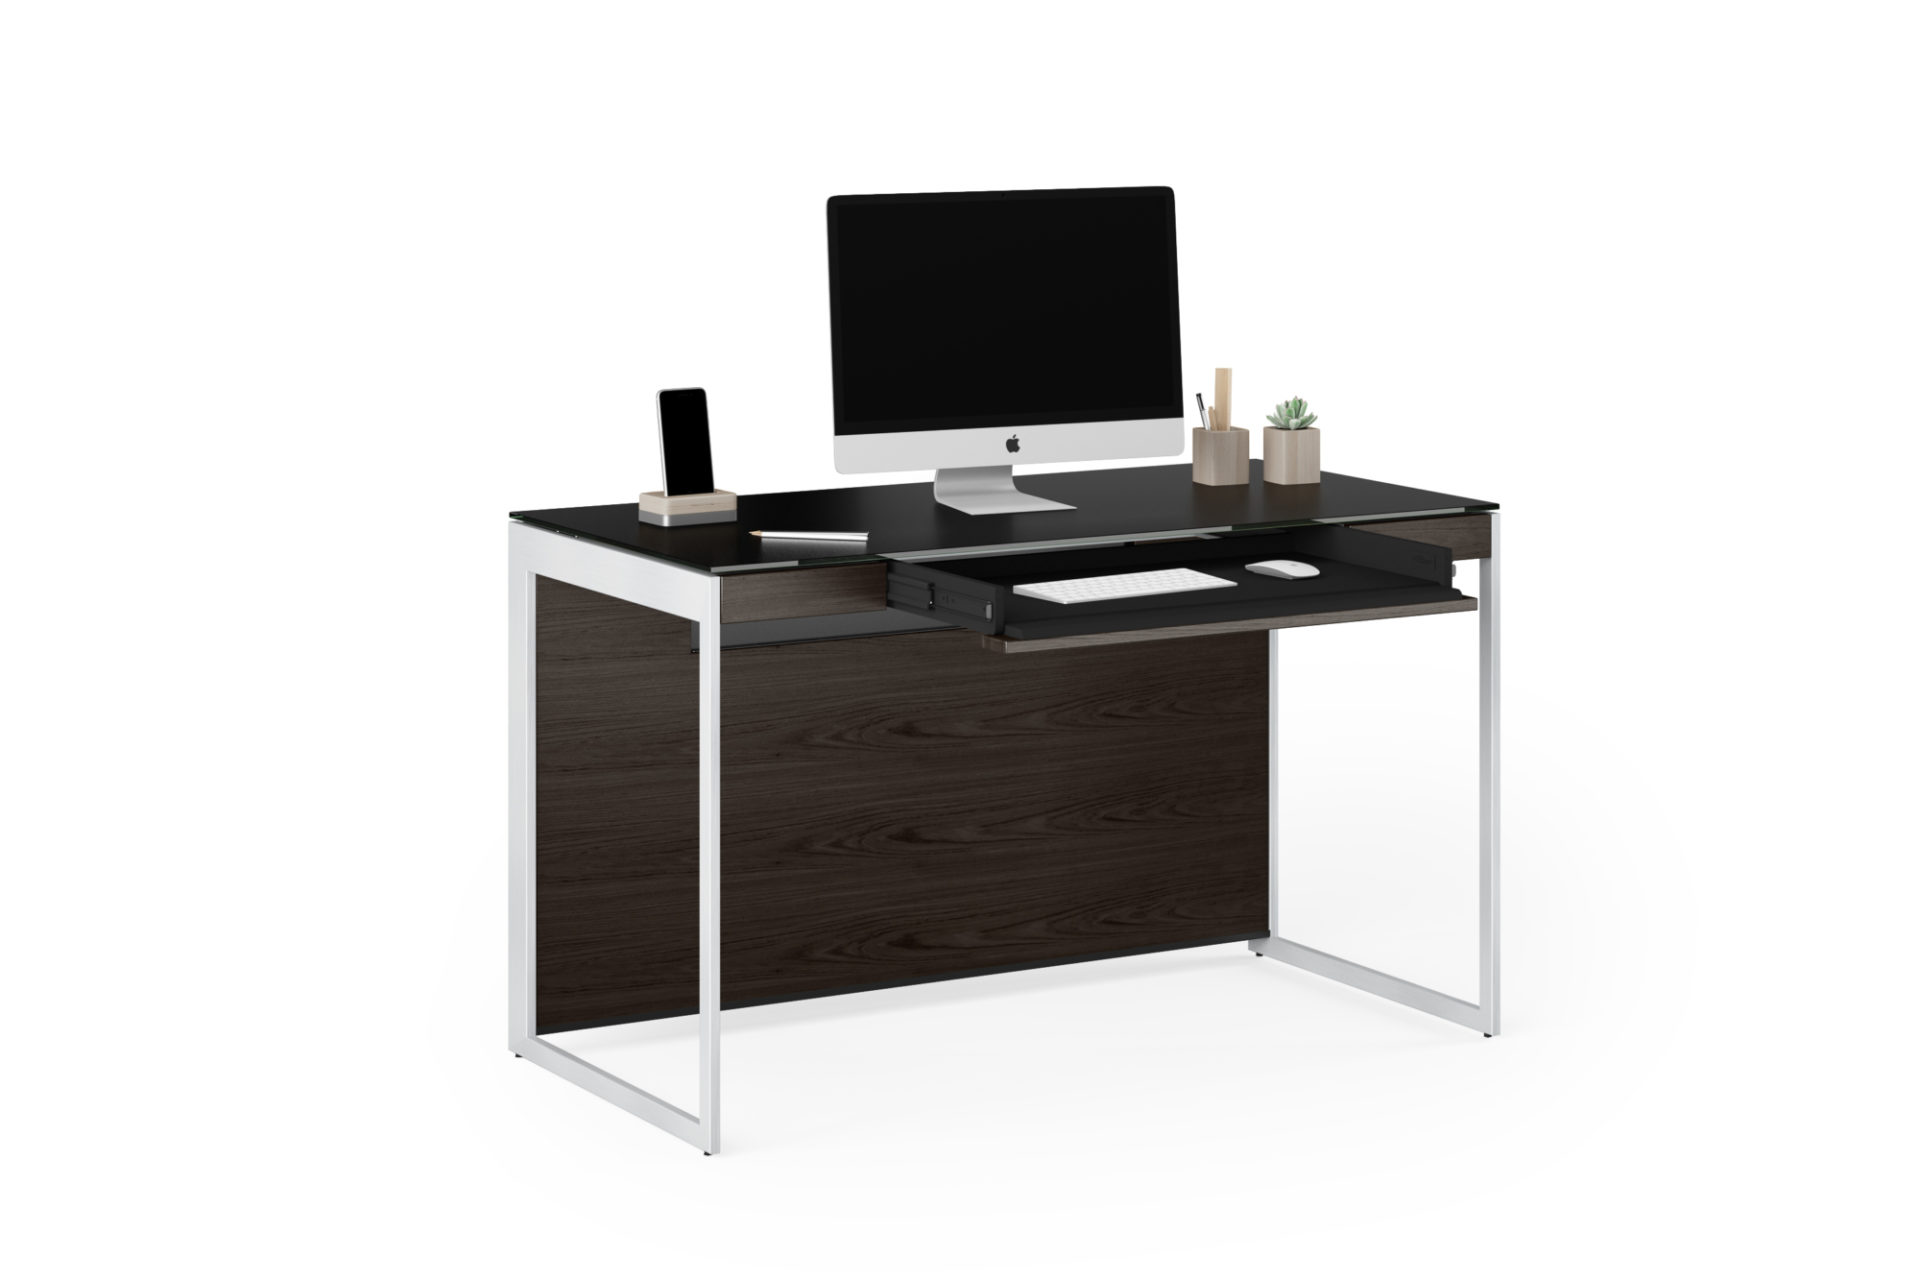 sequel-compact-desk-6103-BDI-CRL-S-modern-office-furniture-4